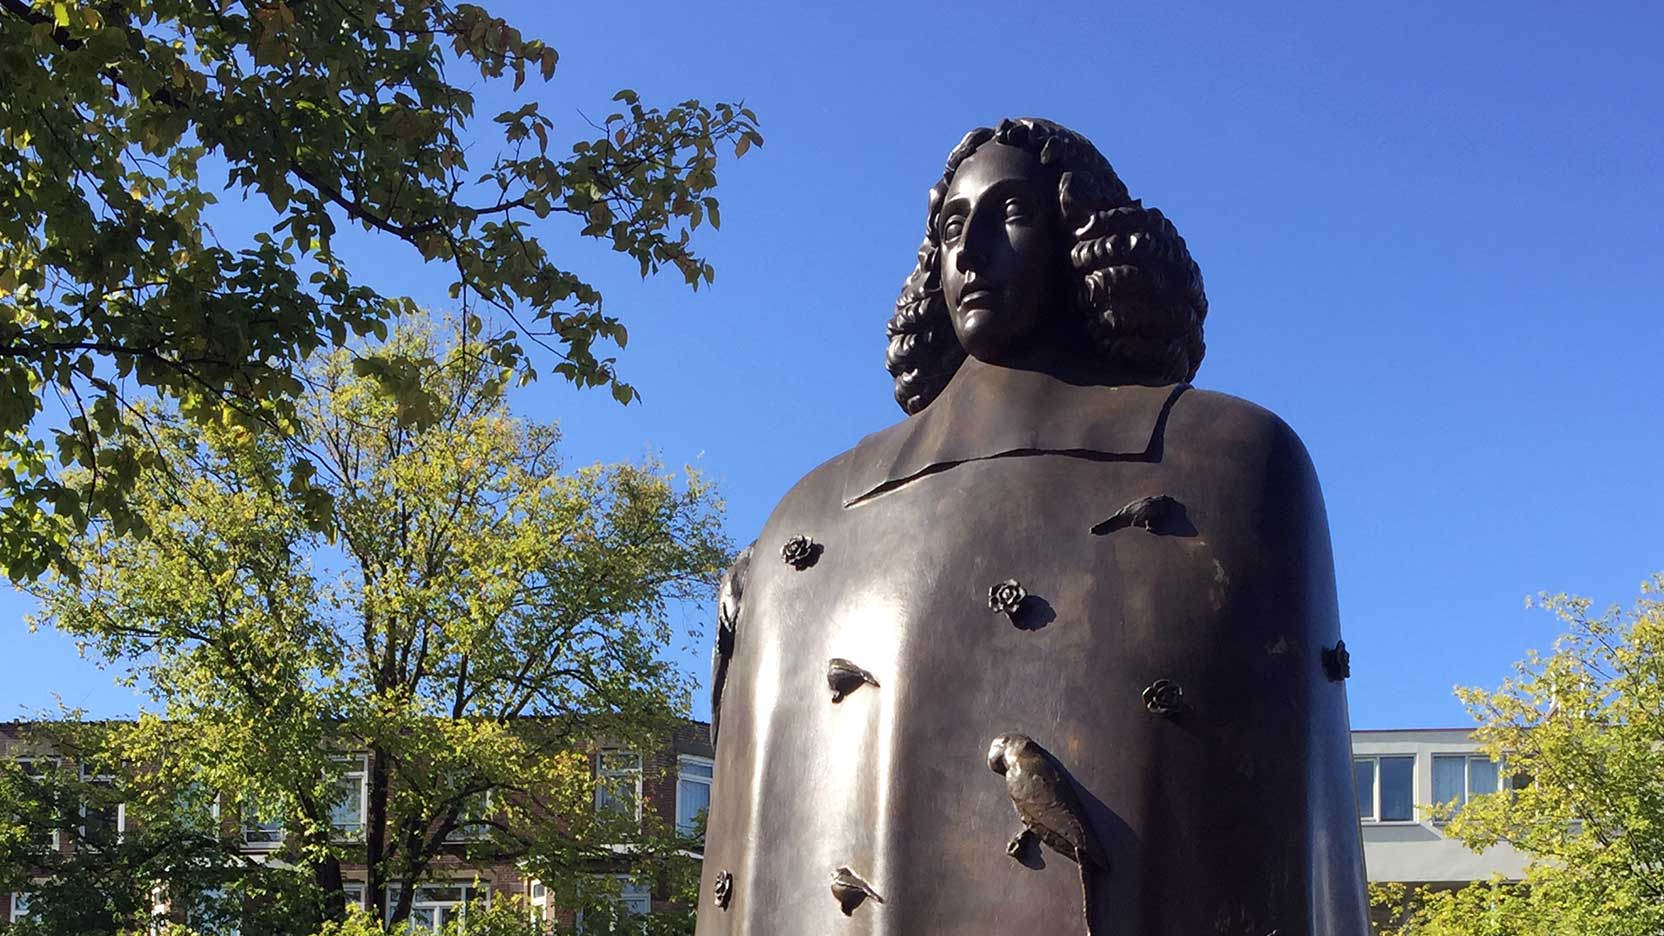 Spinoza statue, Zwanenburgwal, Amsterdam